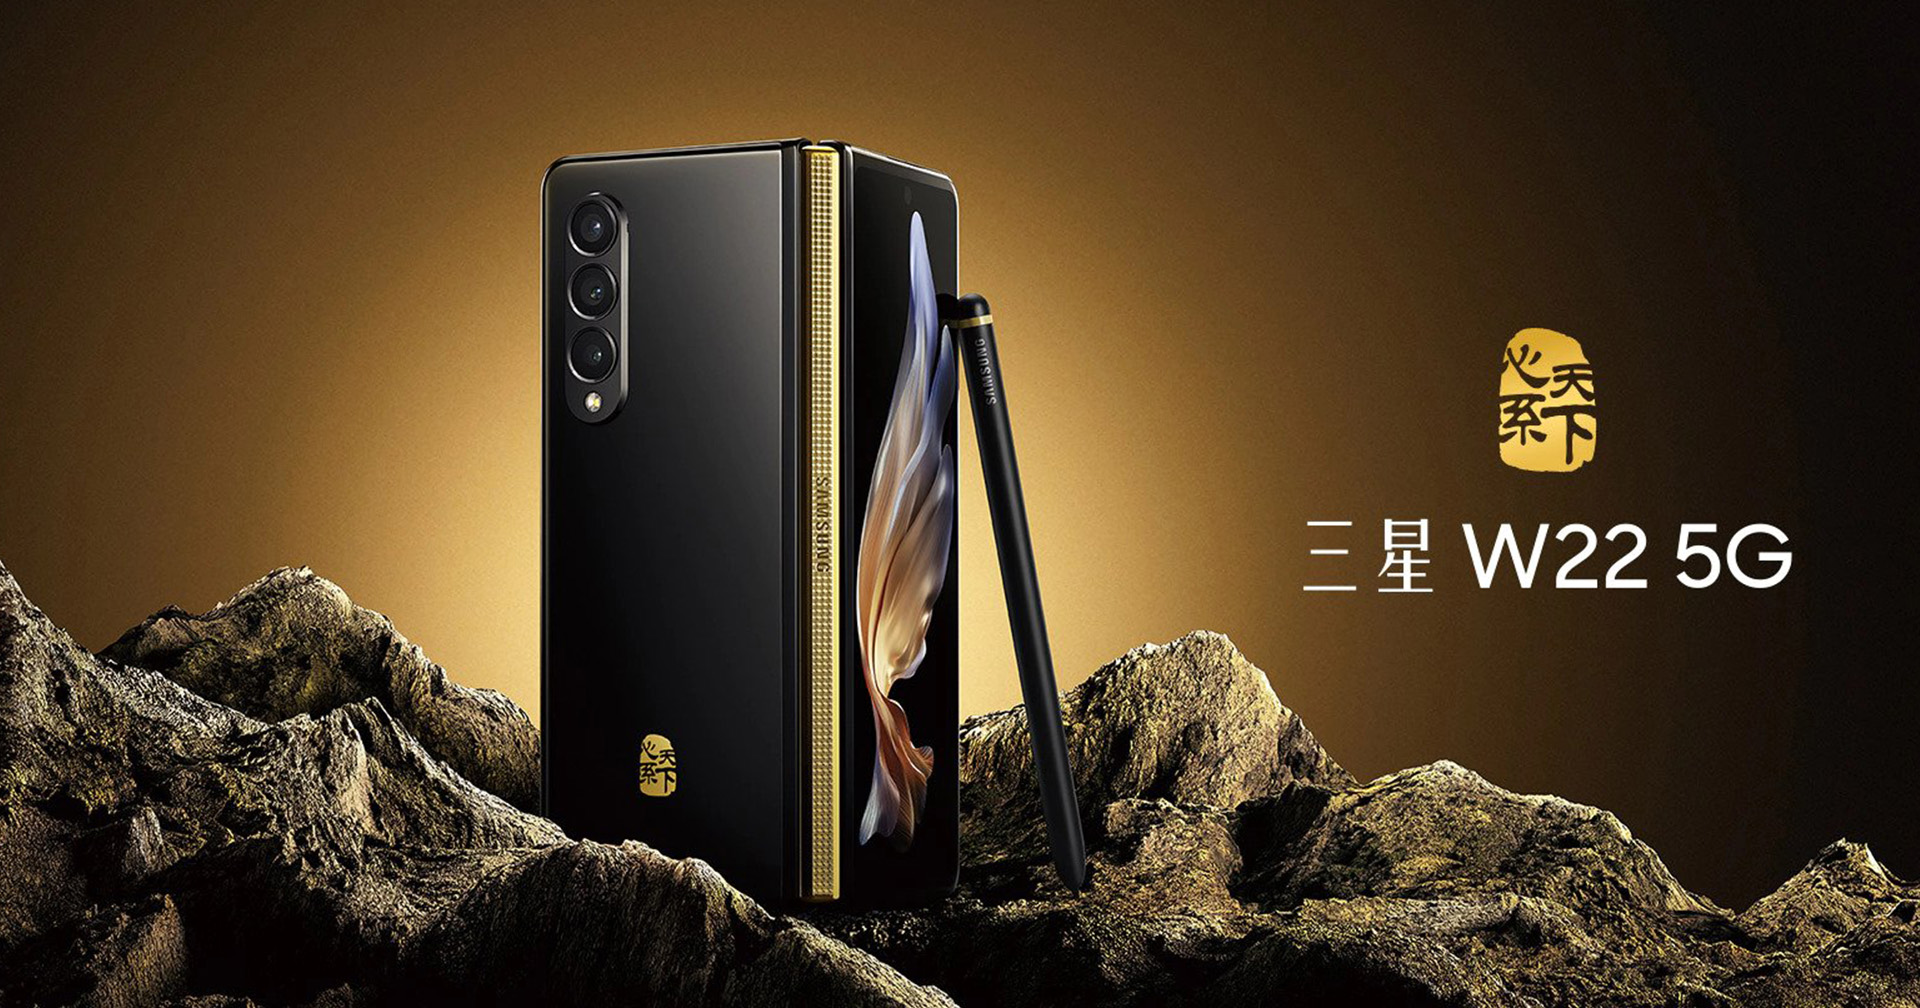 Samsung เปิดตัวสมาร์ตโฟนพับจอ ‘W22 5G’ สำหรับประเทศจีน